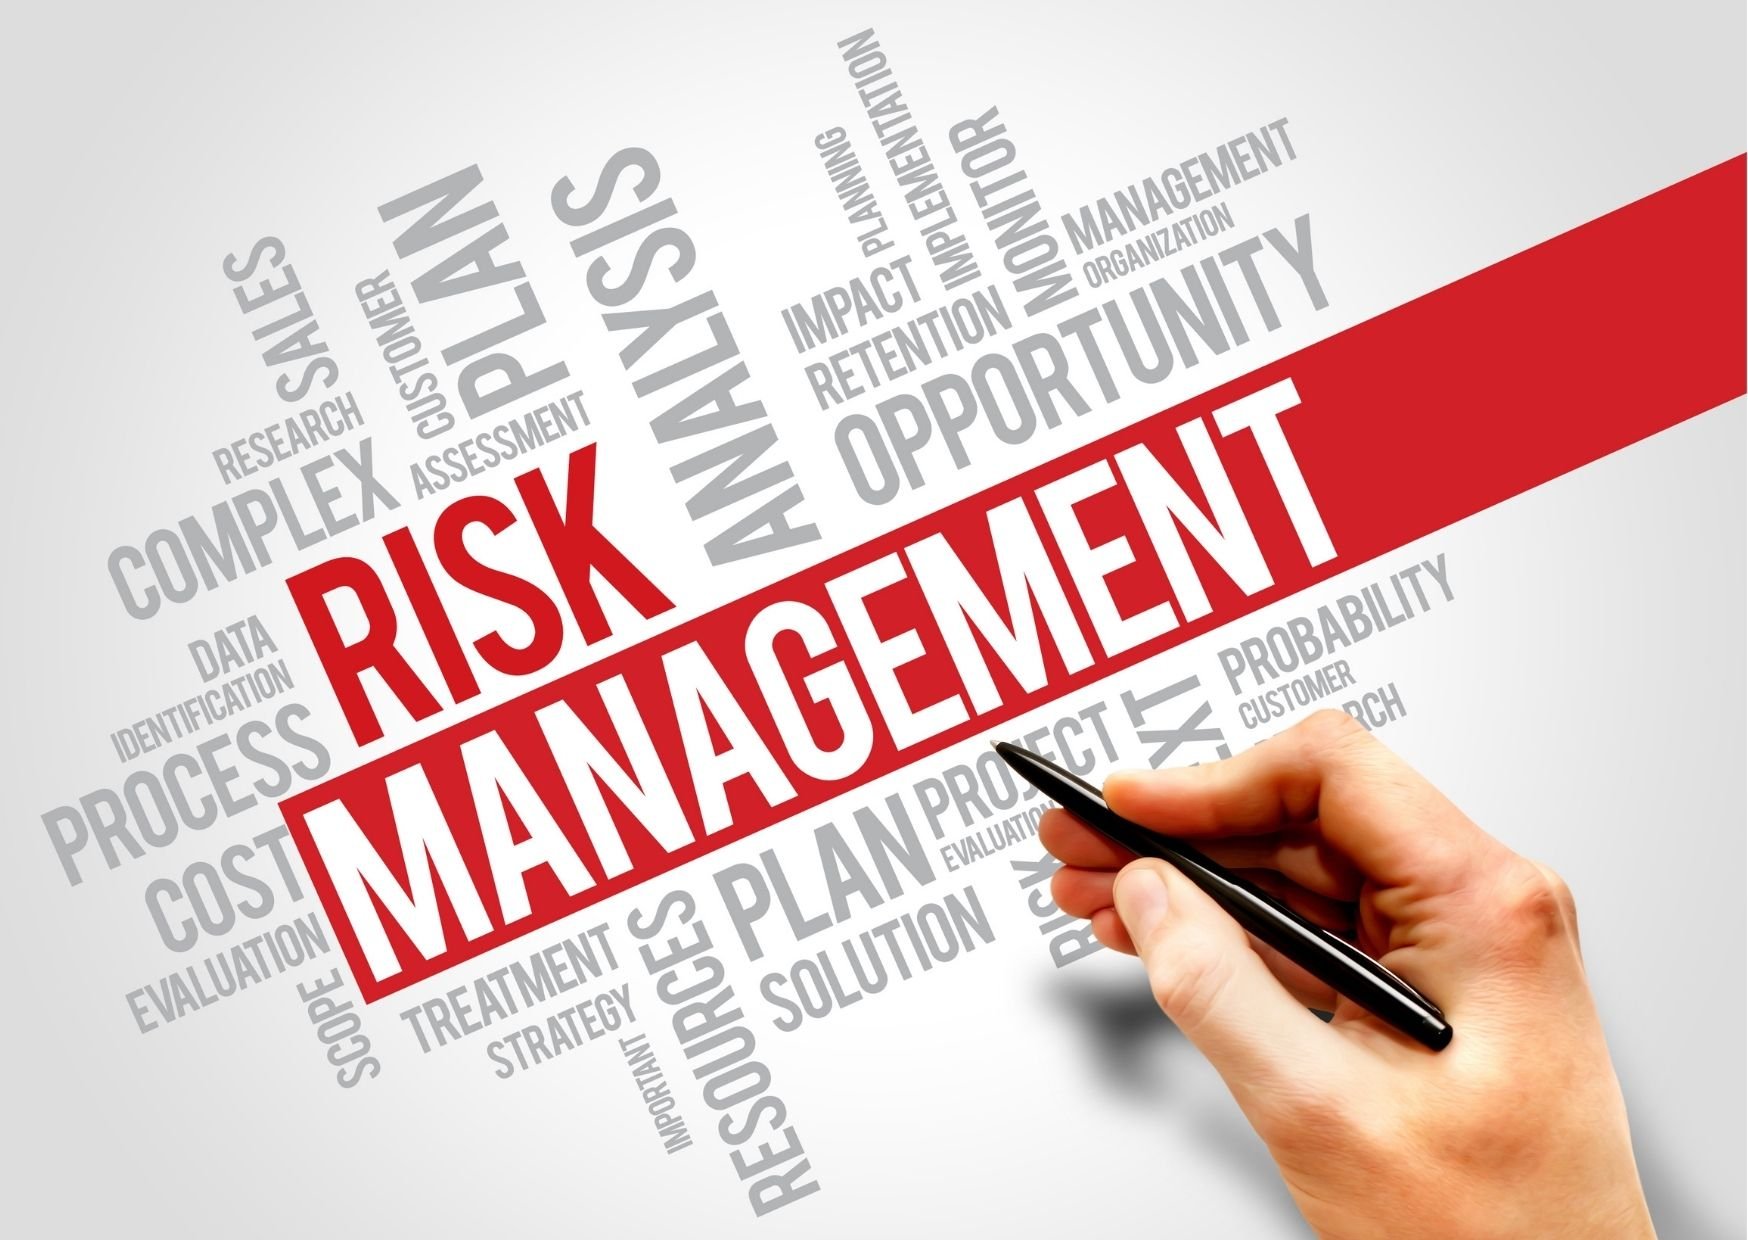 Risk Management in Marketing